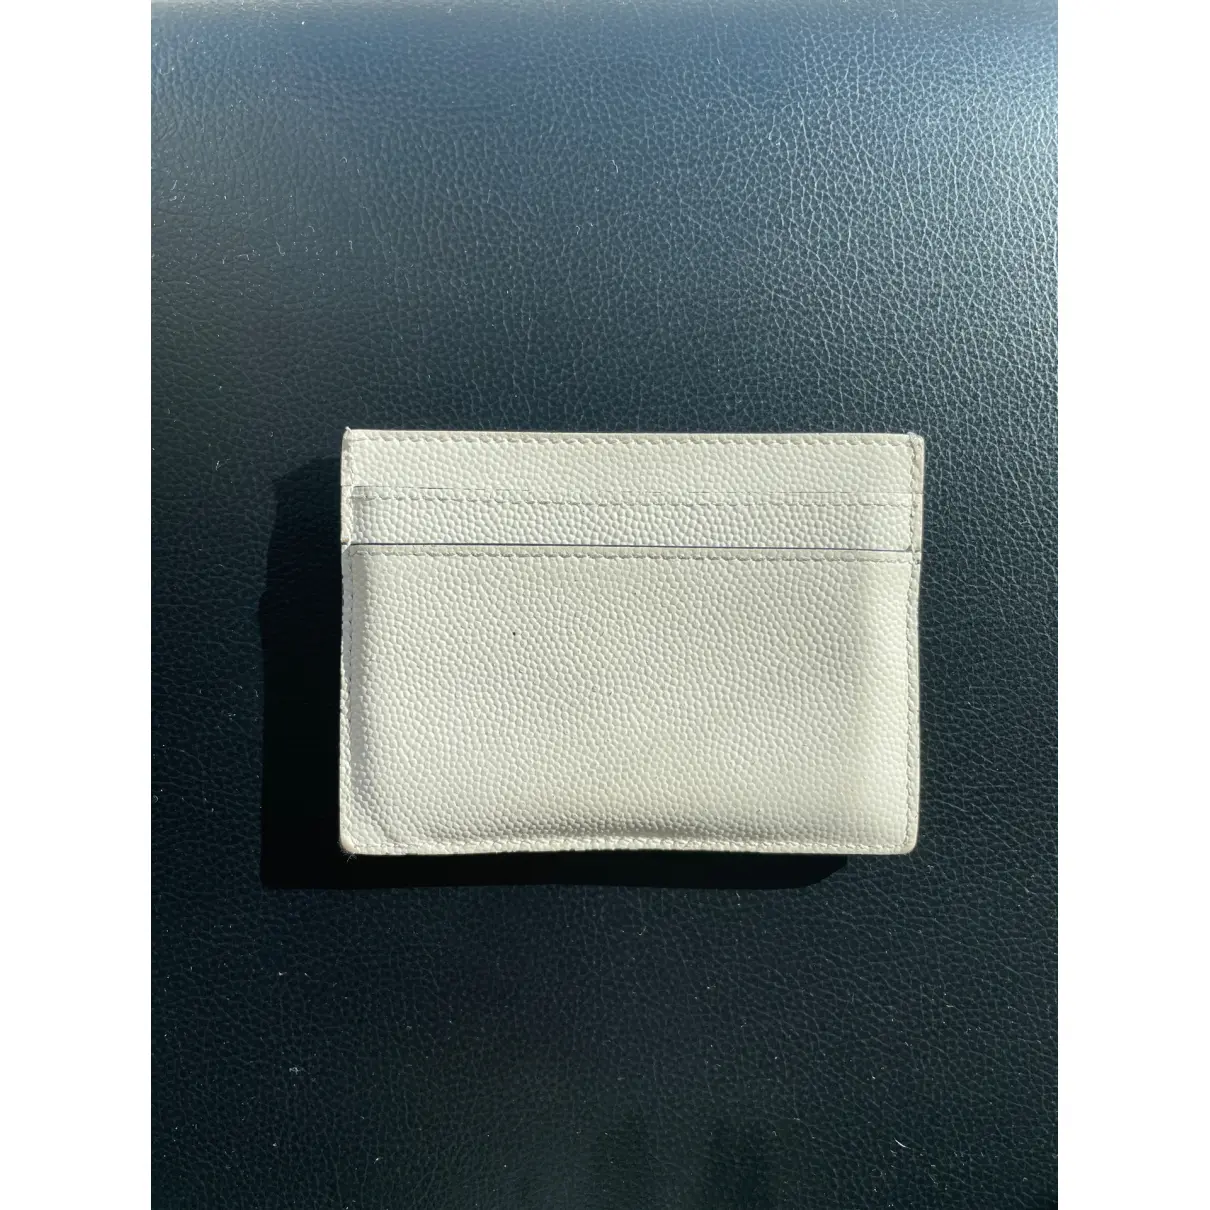 Buy Yves Saint Laurent Leather card wallet online